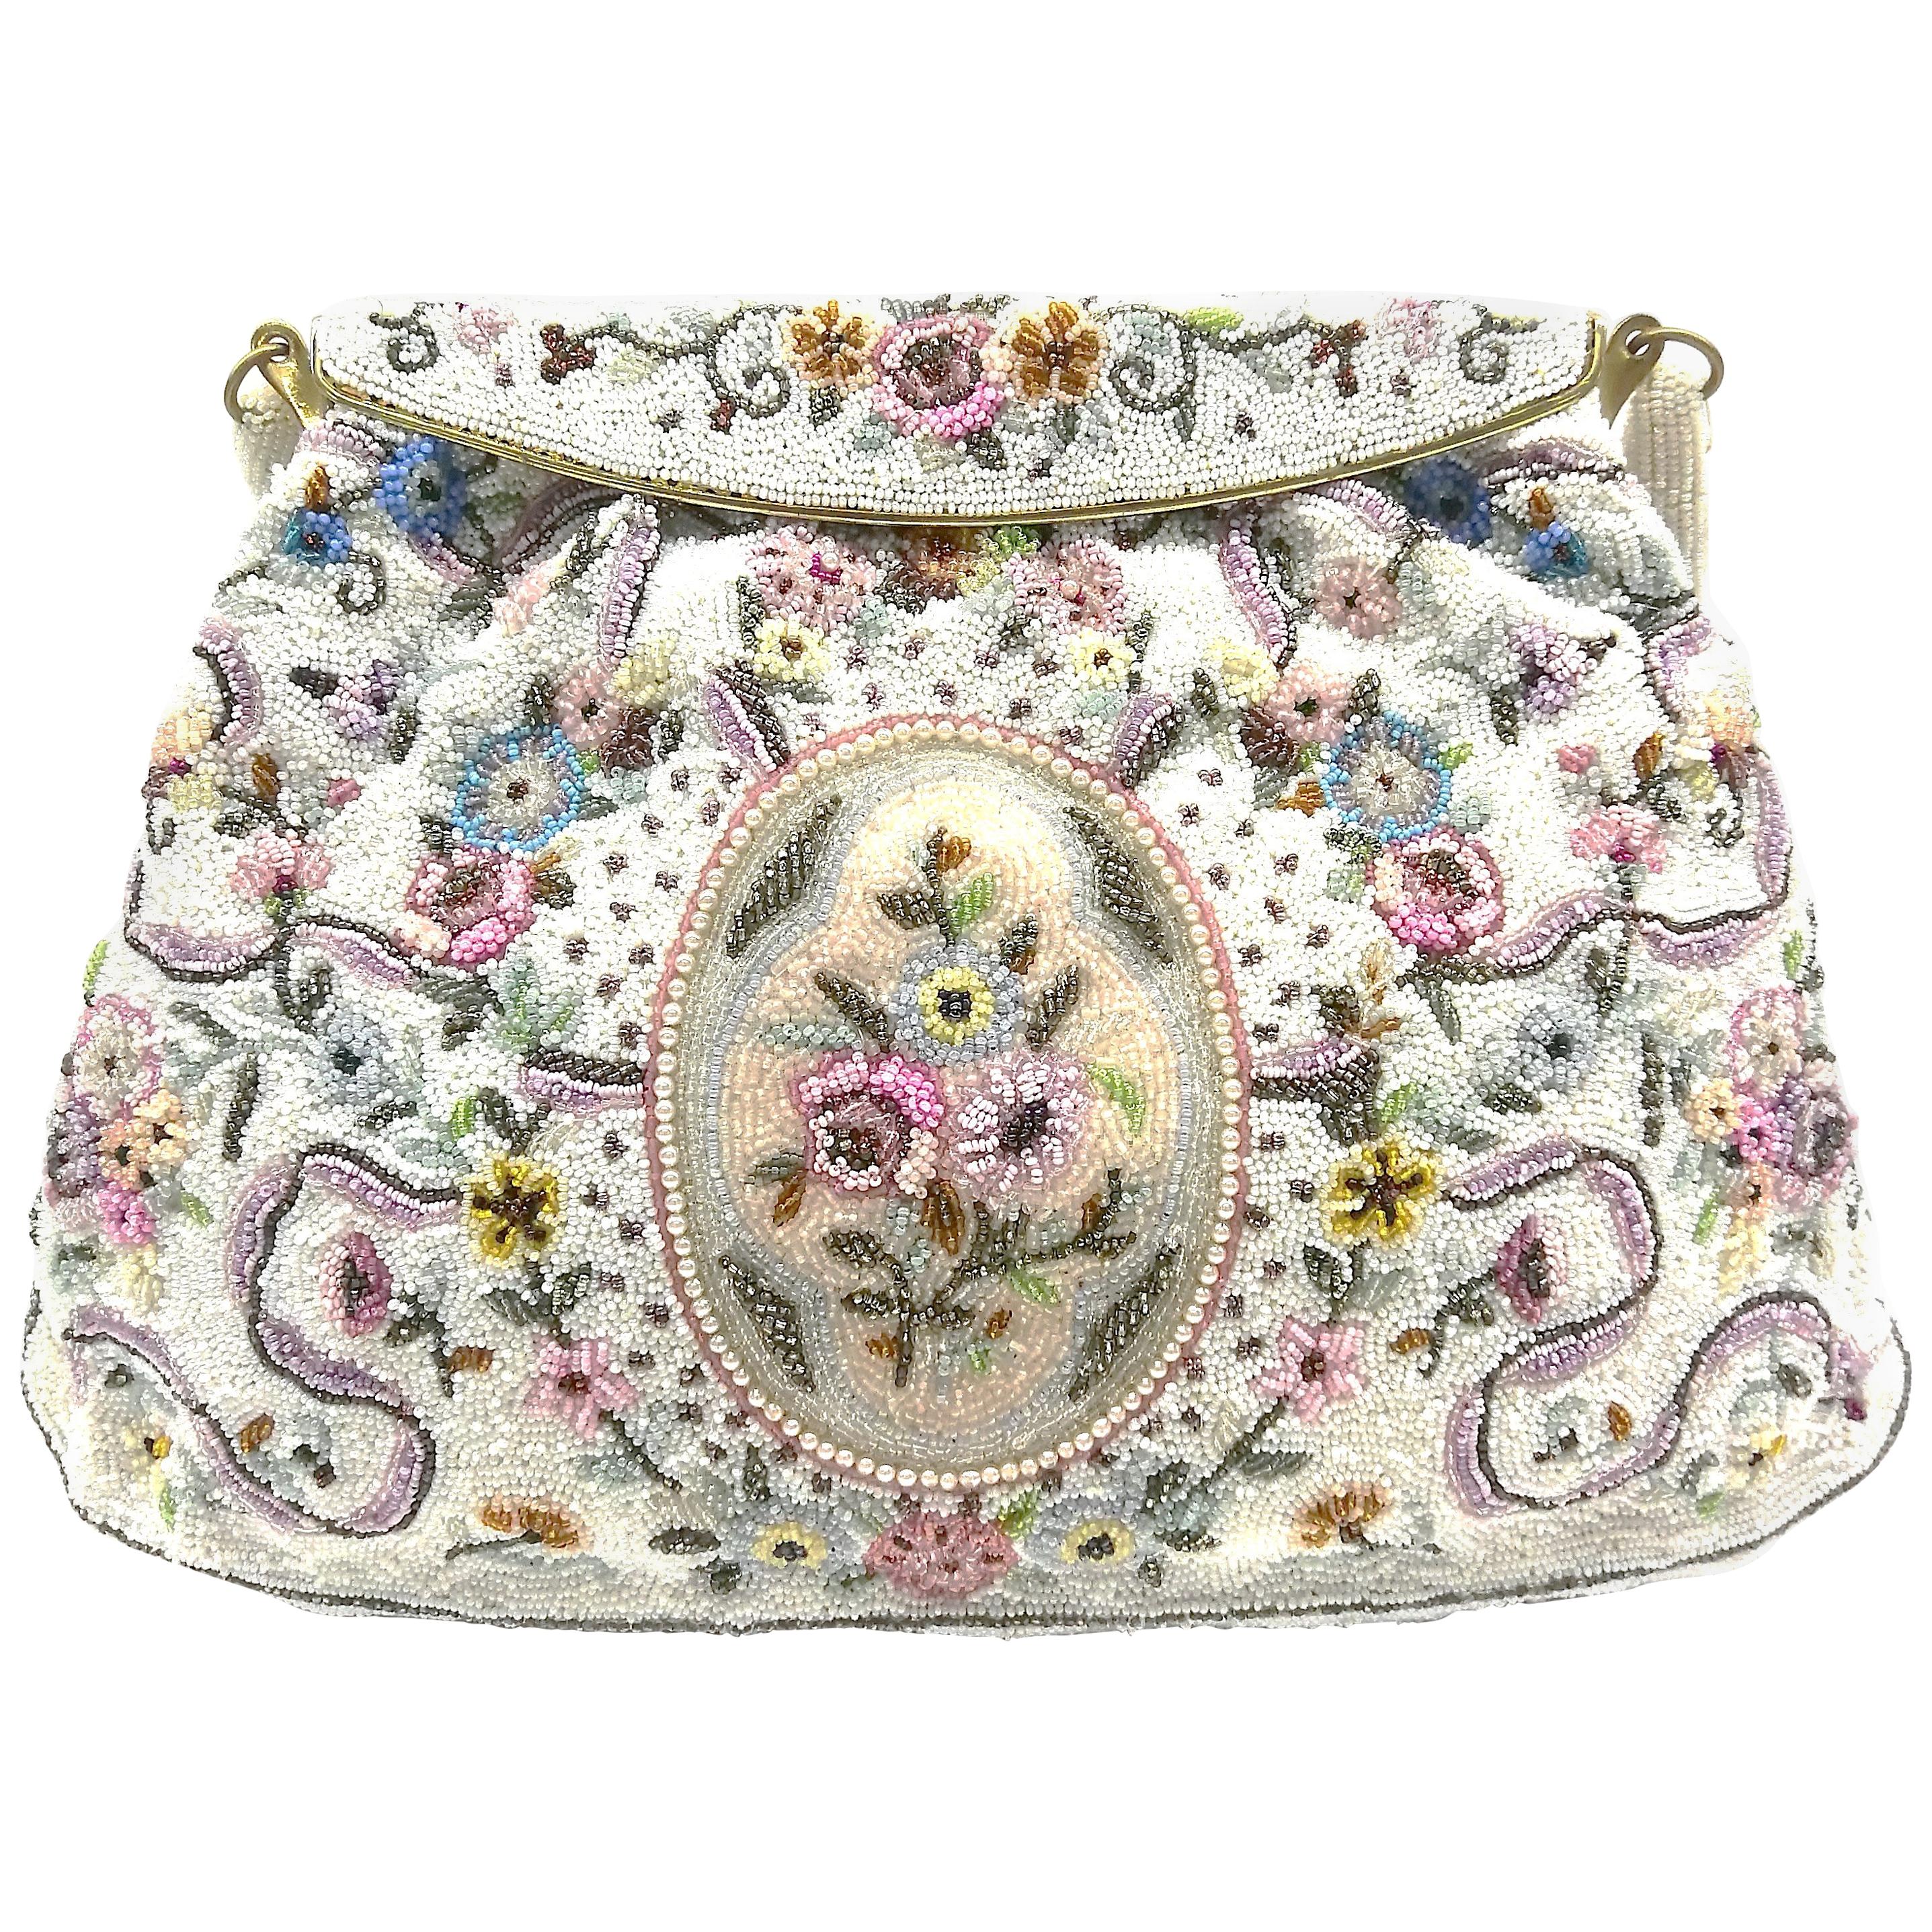 Exquisitely beaded handbag, with floral motifs, Morabito, Paris, 1950s